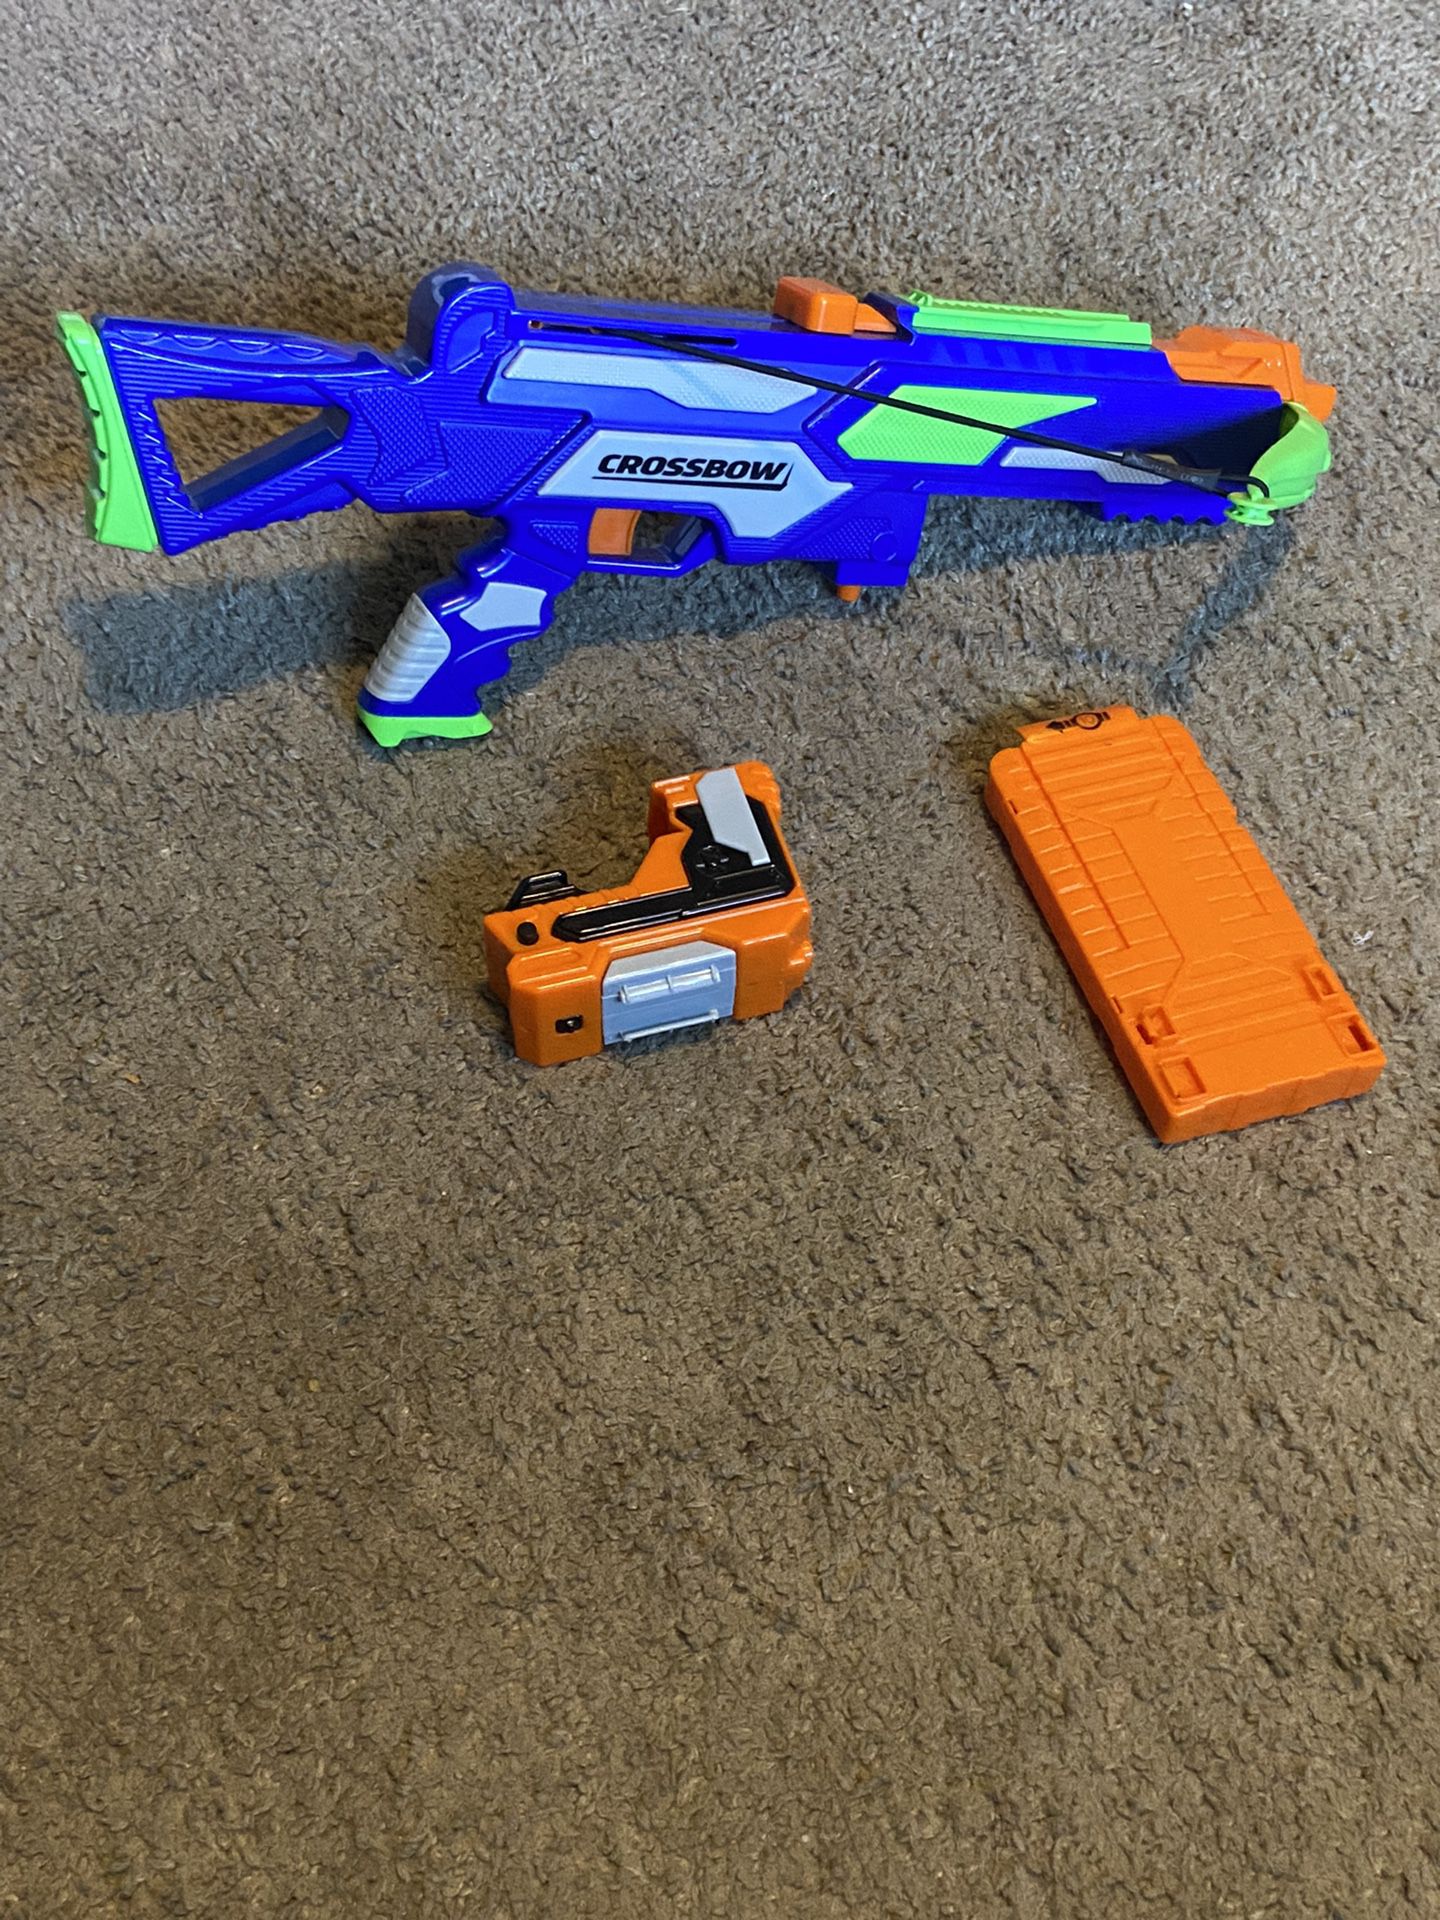 Crossbow Nerf gun